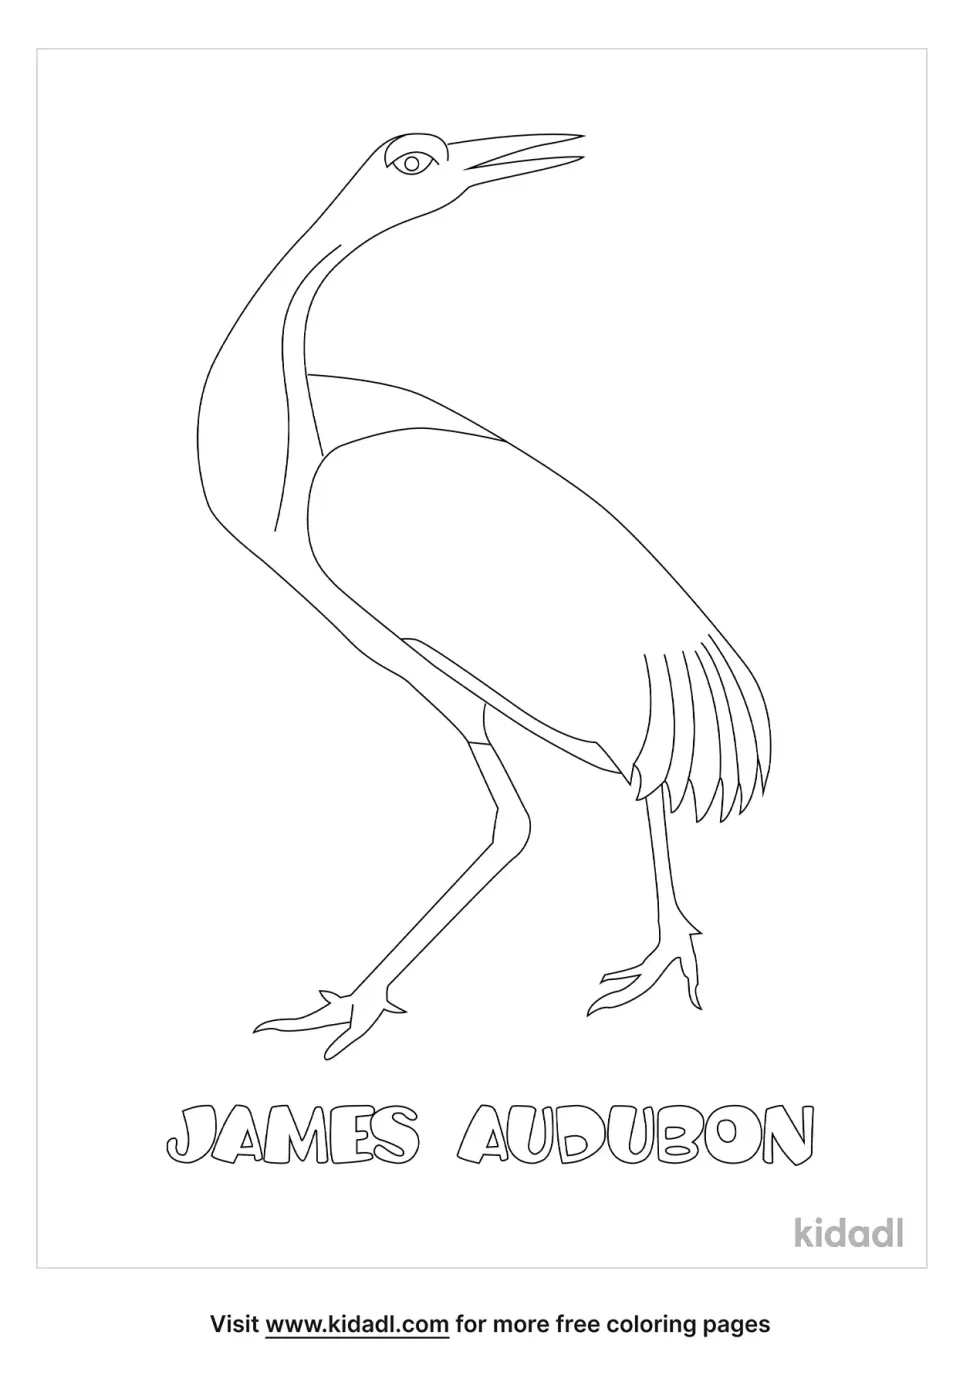 James Audubon